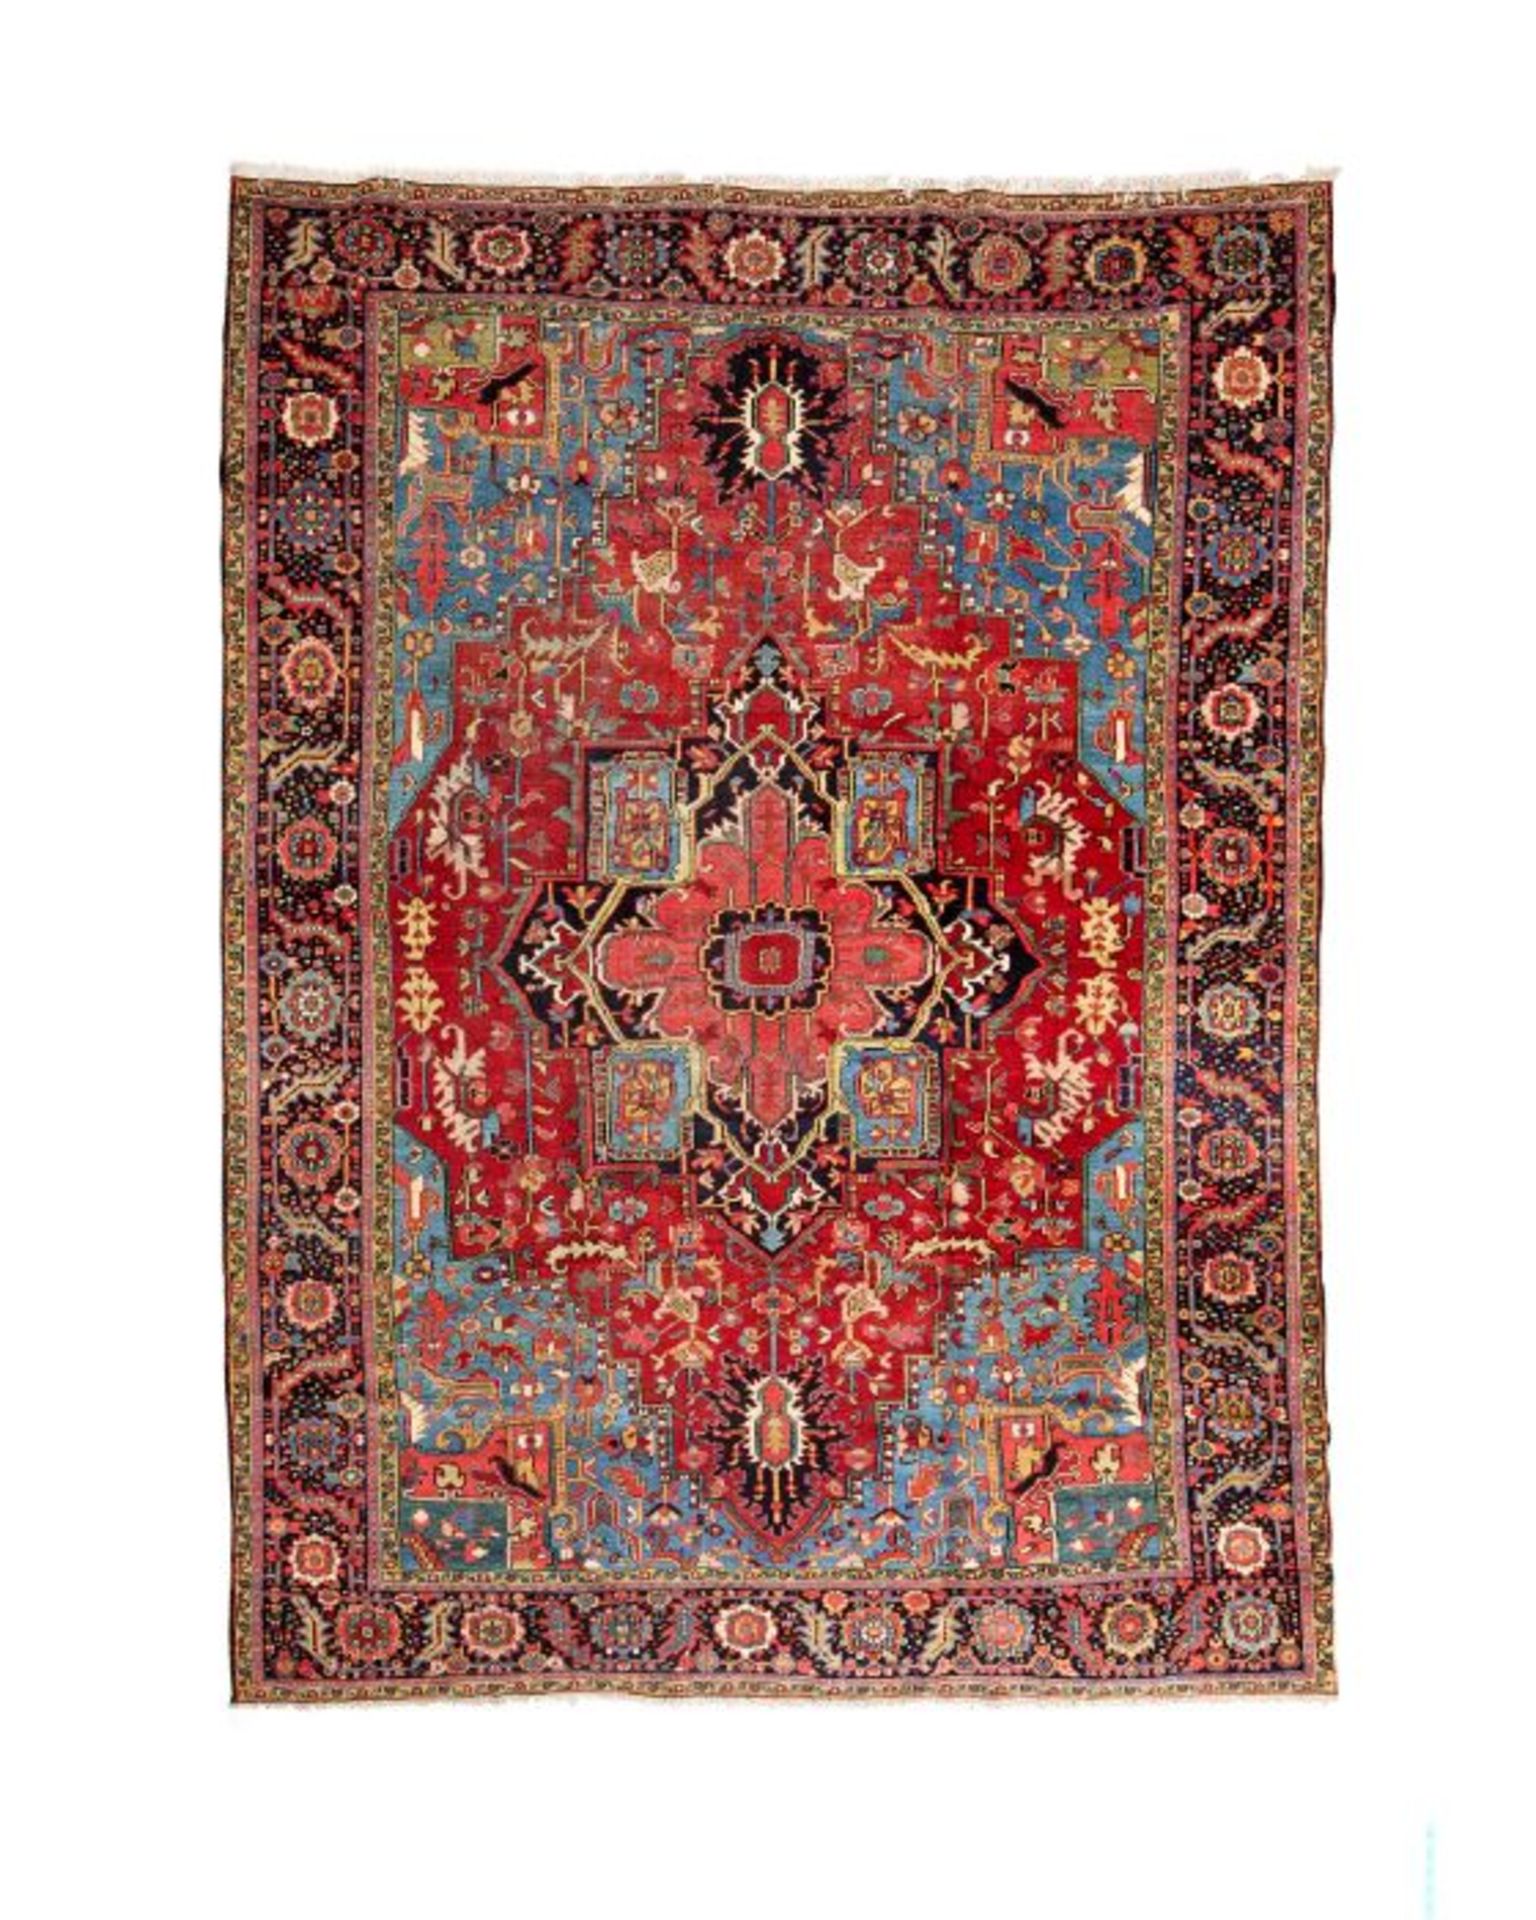 A Heriz Carpet, North West Persia, circa 1920